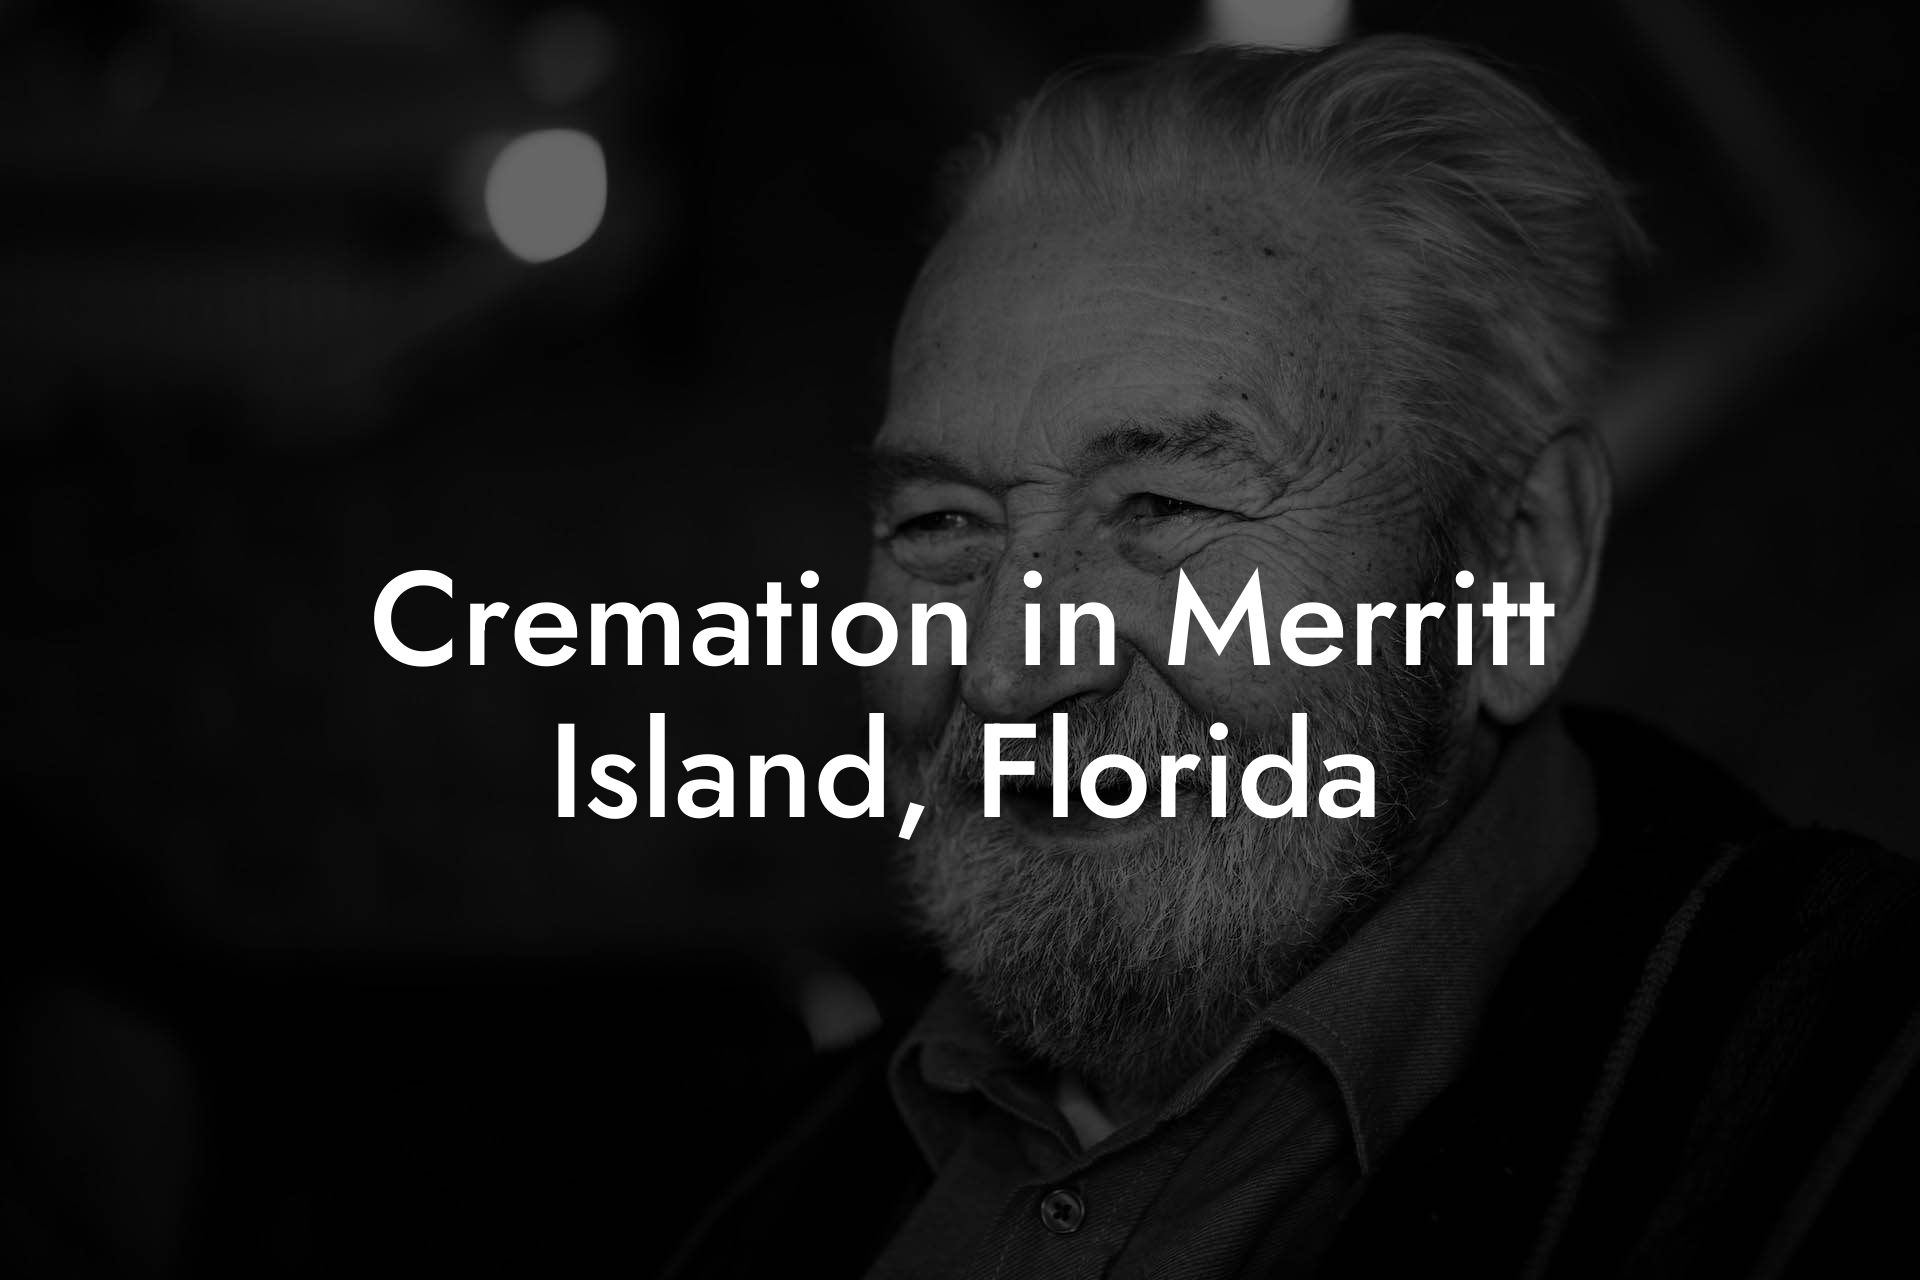 Cremation in Merritt Island, Florida